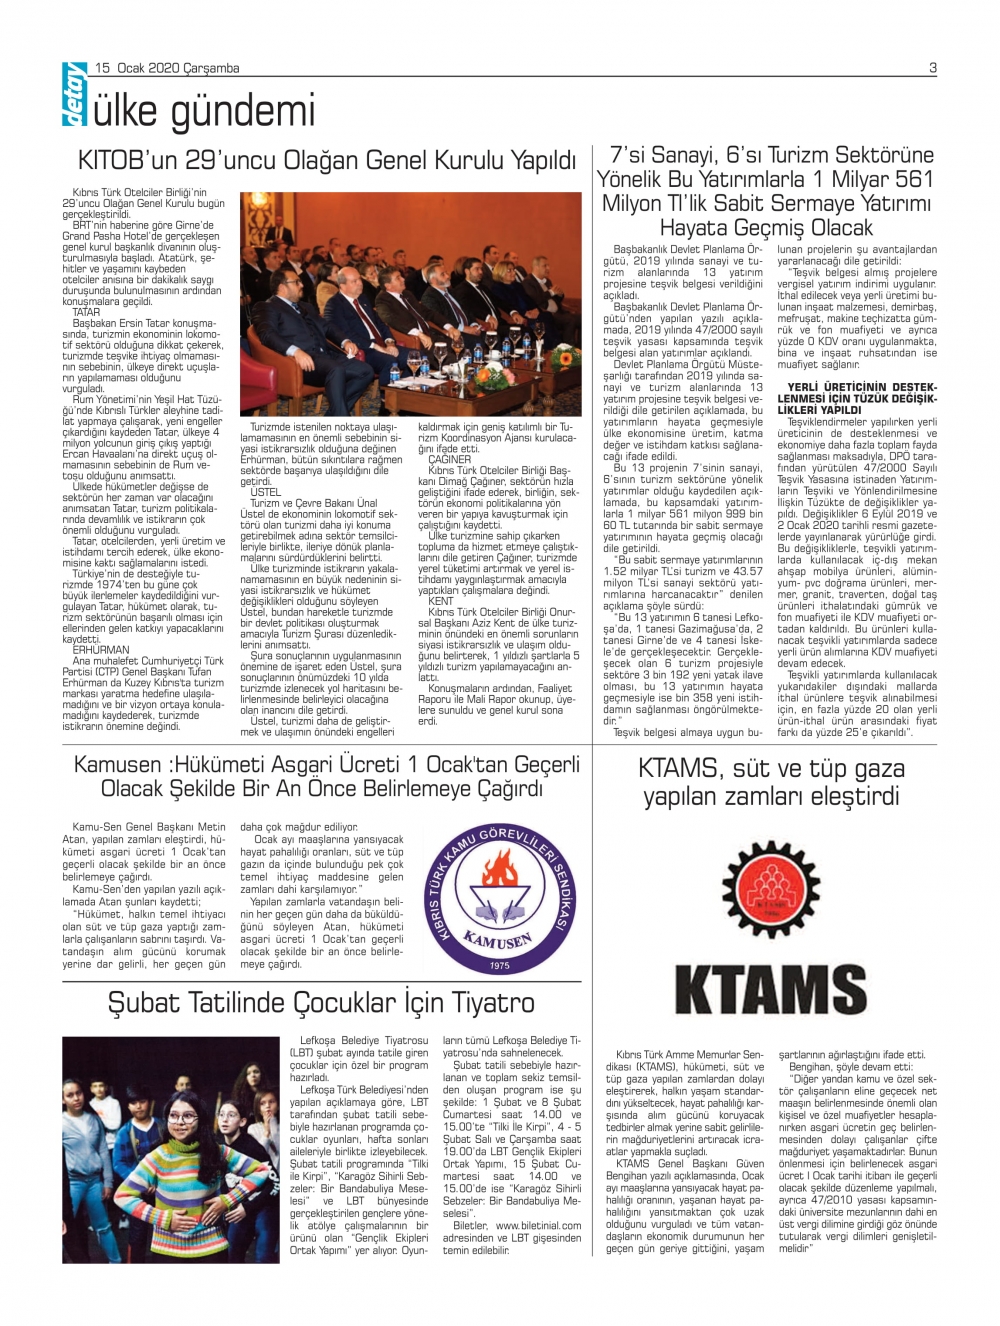 Detay Gazetes 15 Ocak 2020 galerisi resim 3